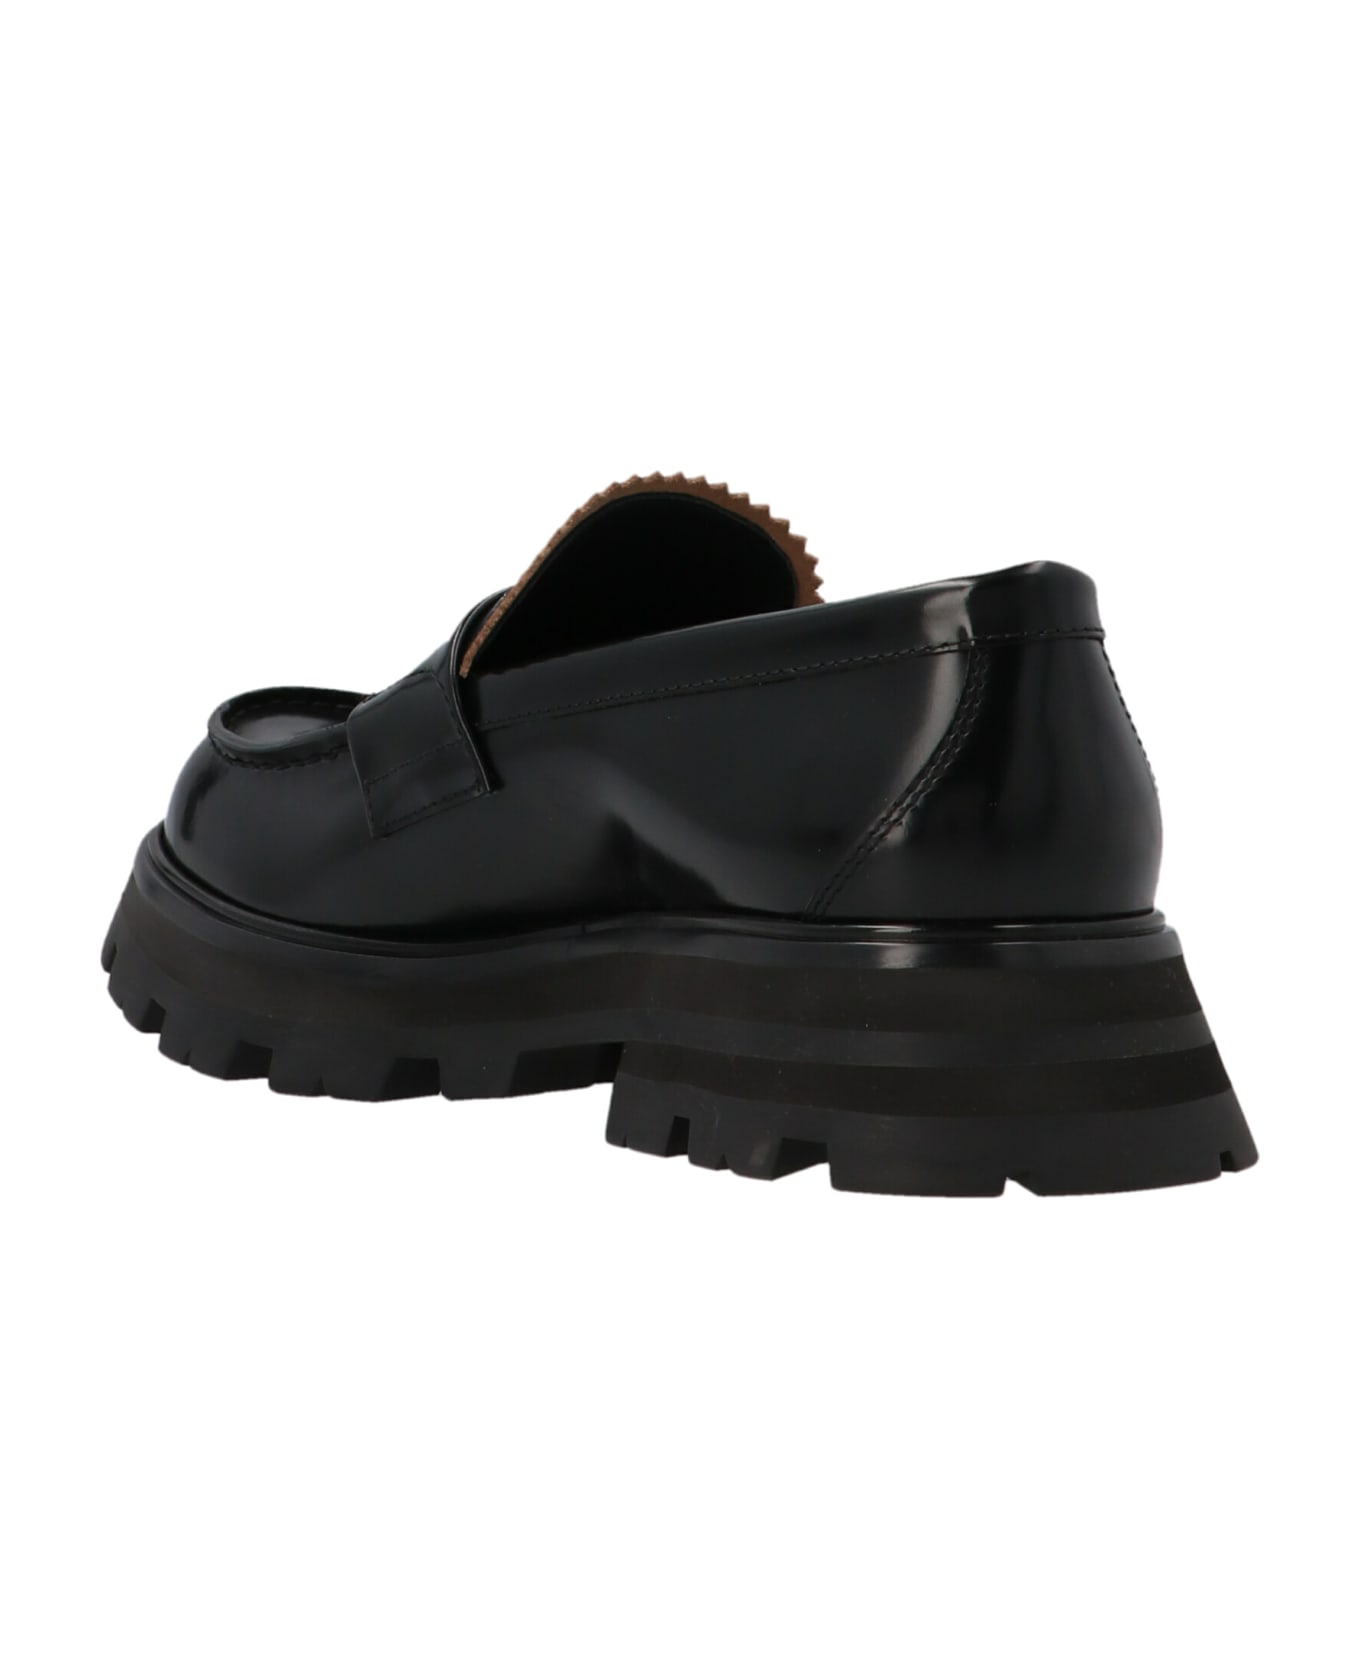 Alexander McQueen Wander Leather Loafers - black フラットシューズ